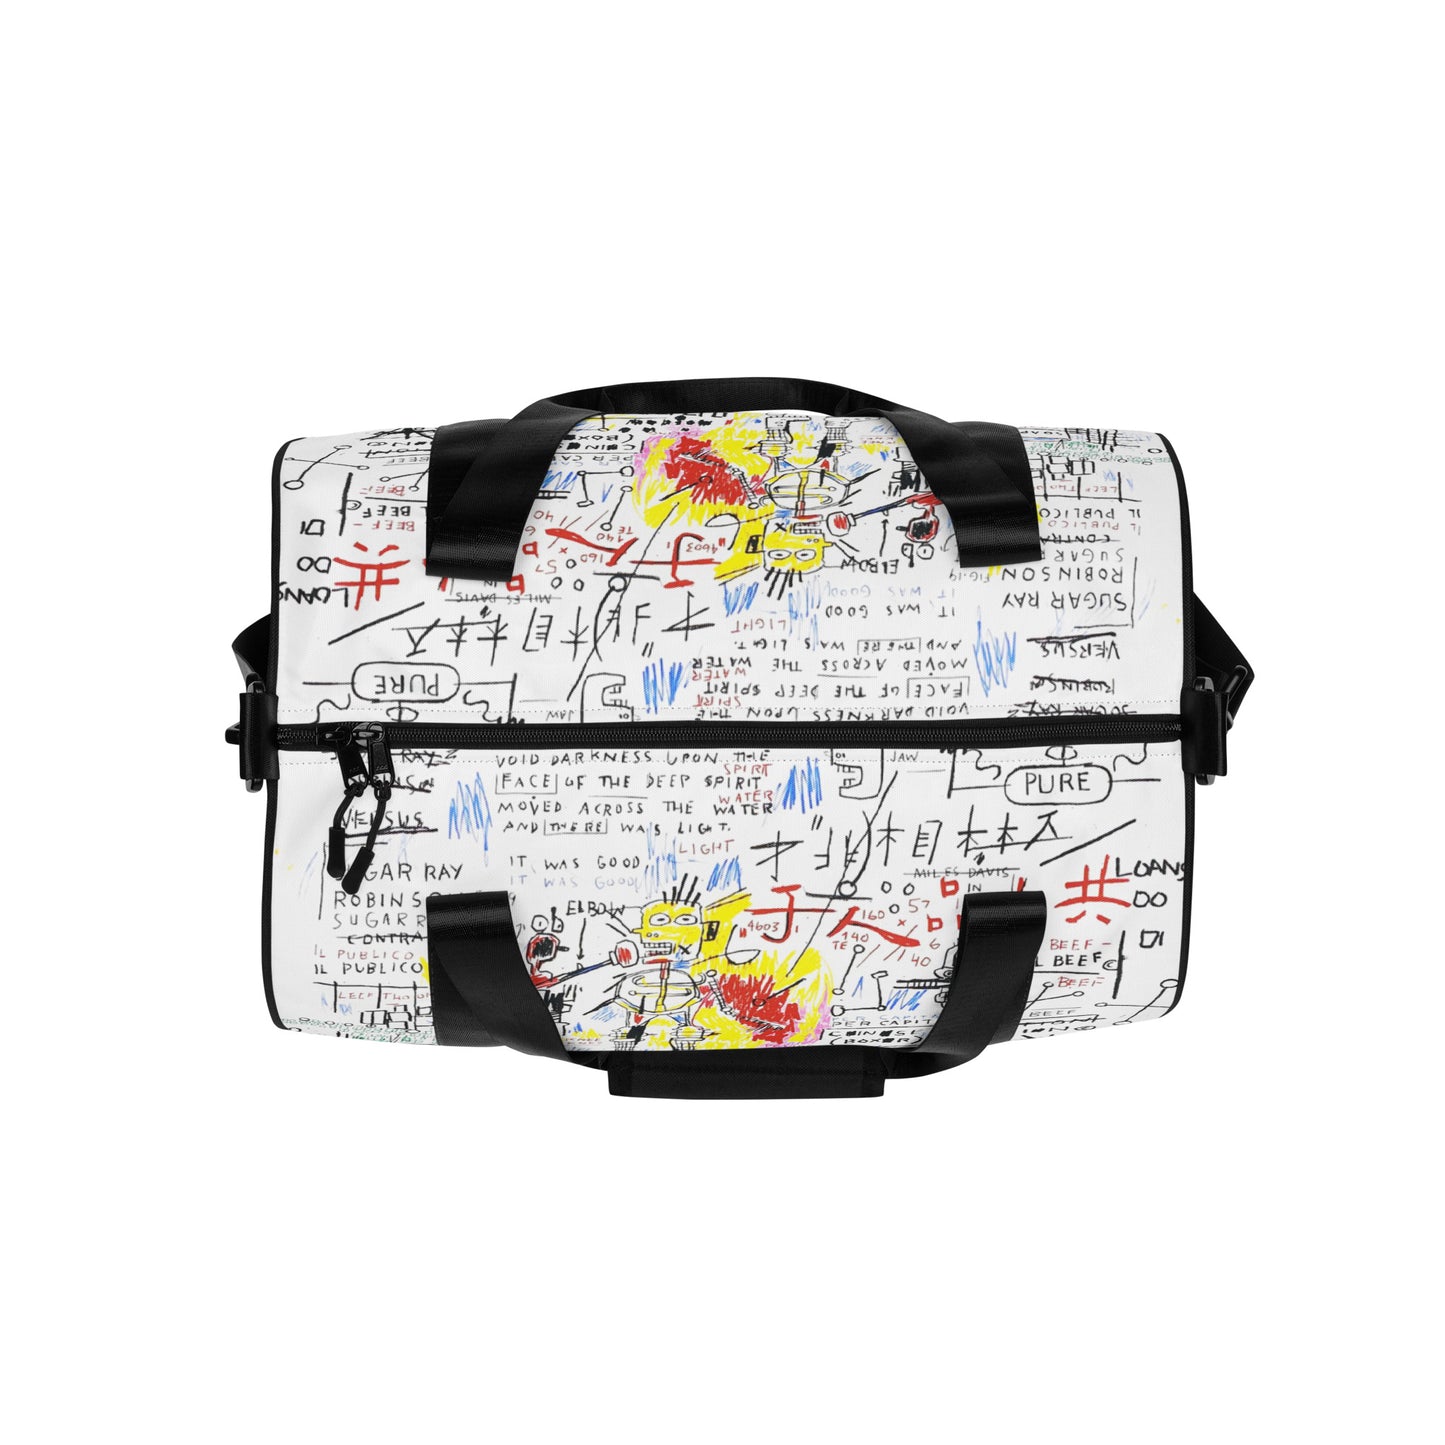 Jean-Michel Basquiat "Boxer Rebellion" Artwork Gym Bag